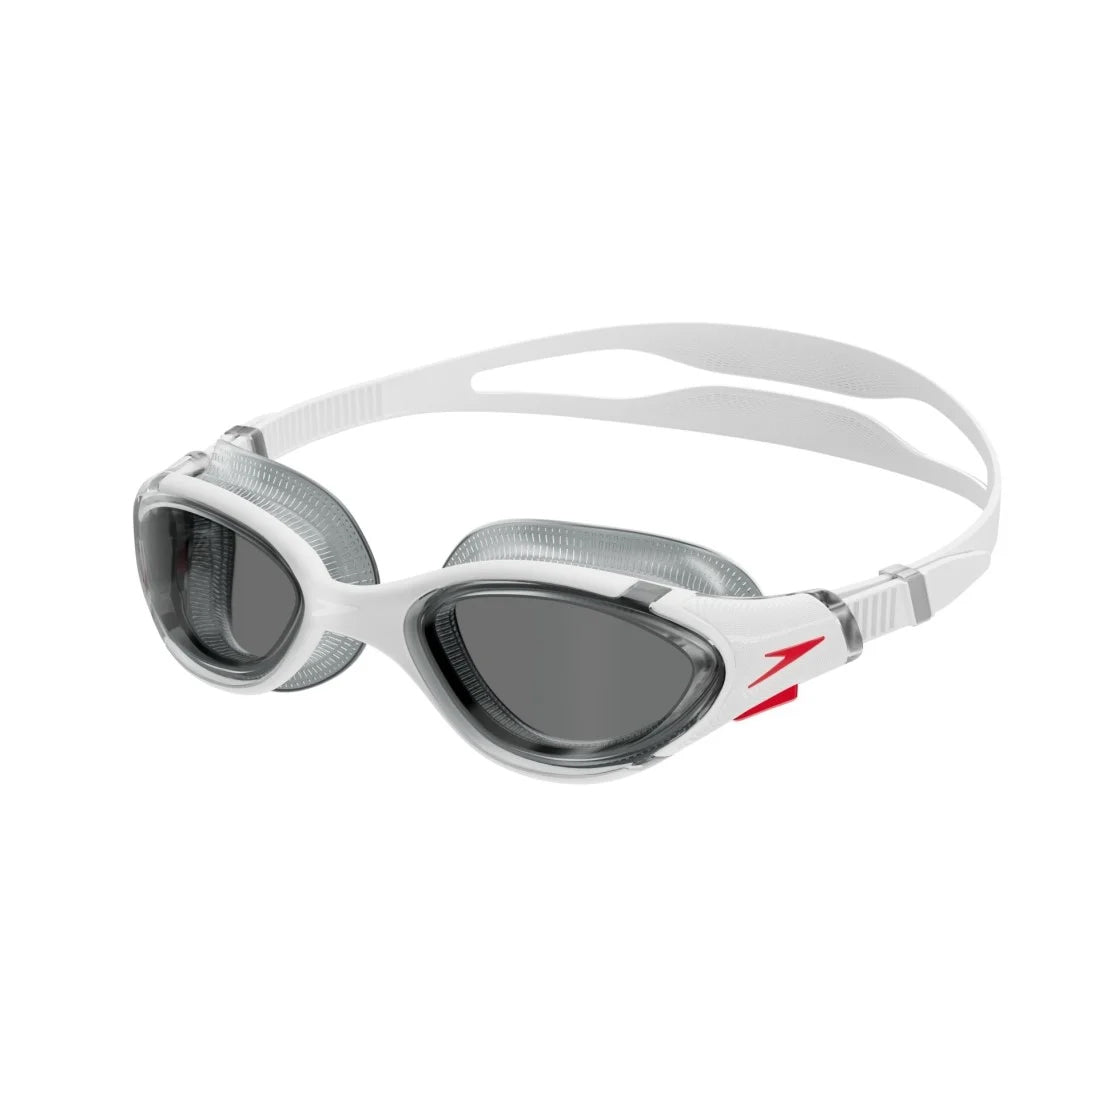 Speedo Biofuse 2.0 Goggles - Best Price online Prokicksports.com